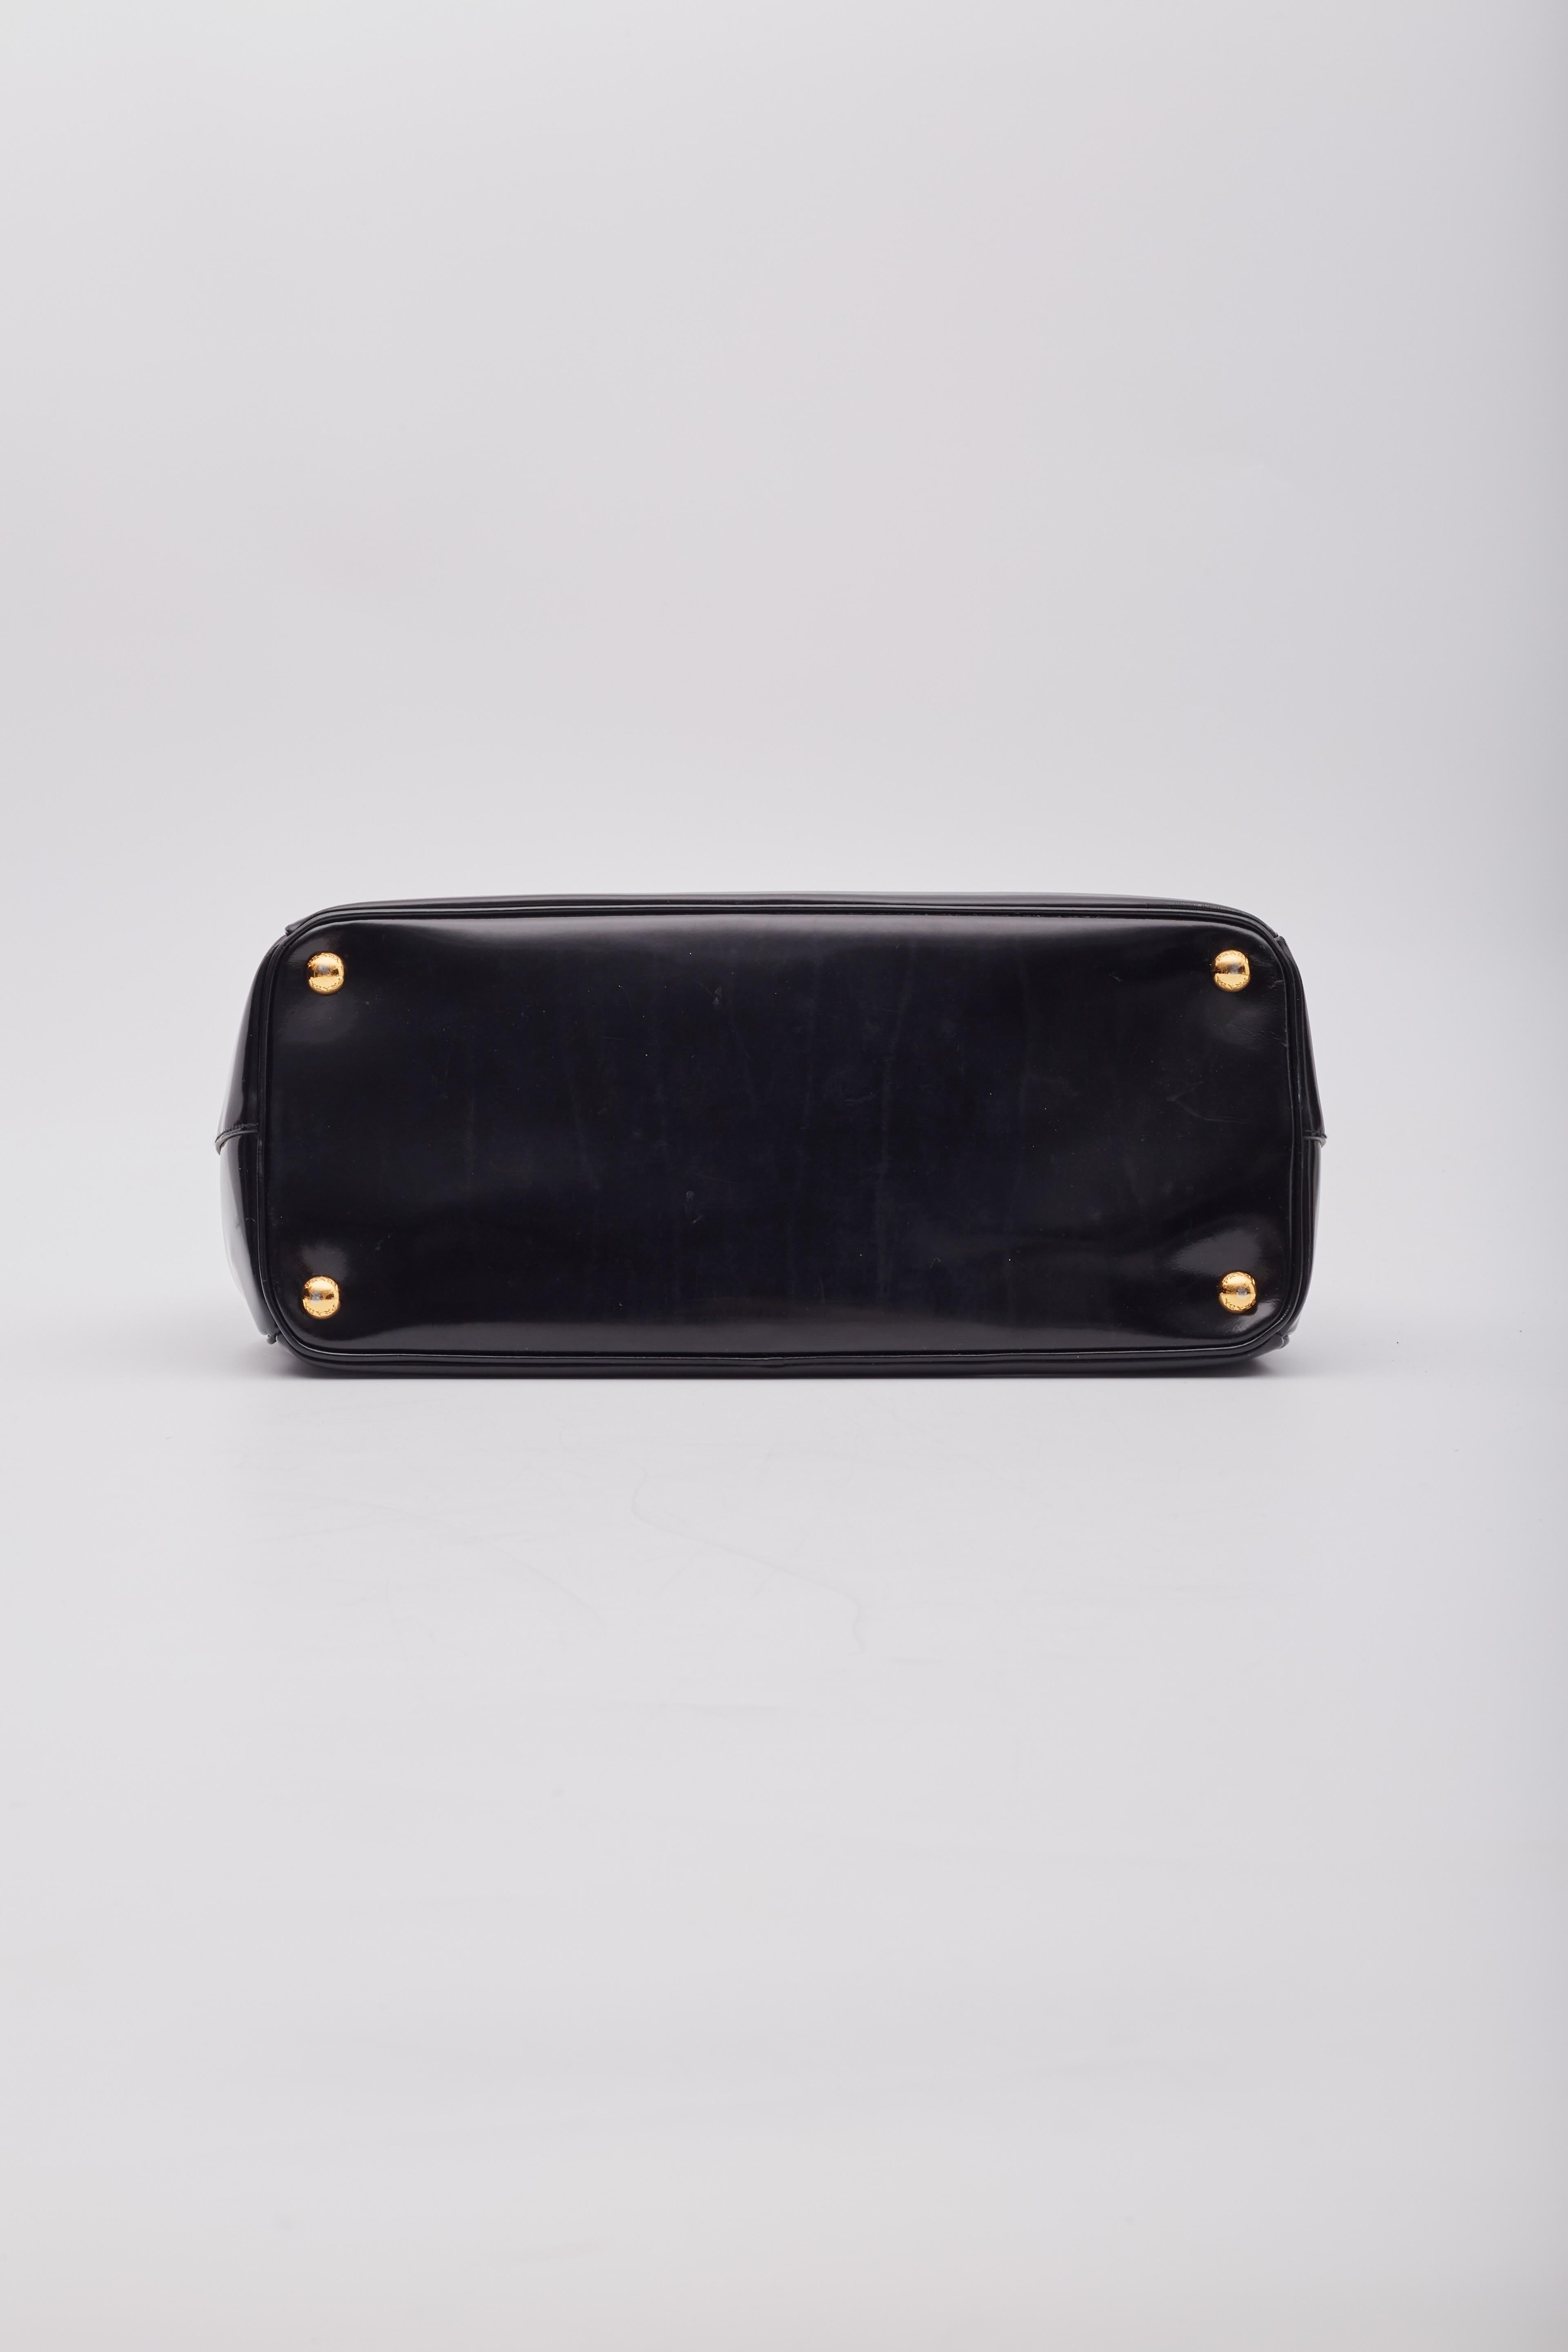 Prada Black Patent Leather Galleria Tote Bag For Sale 4